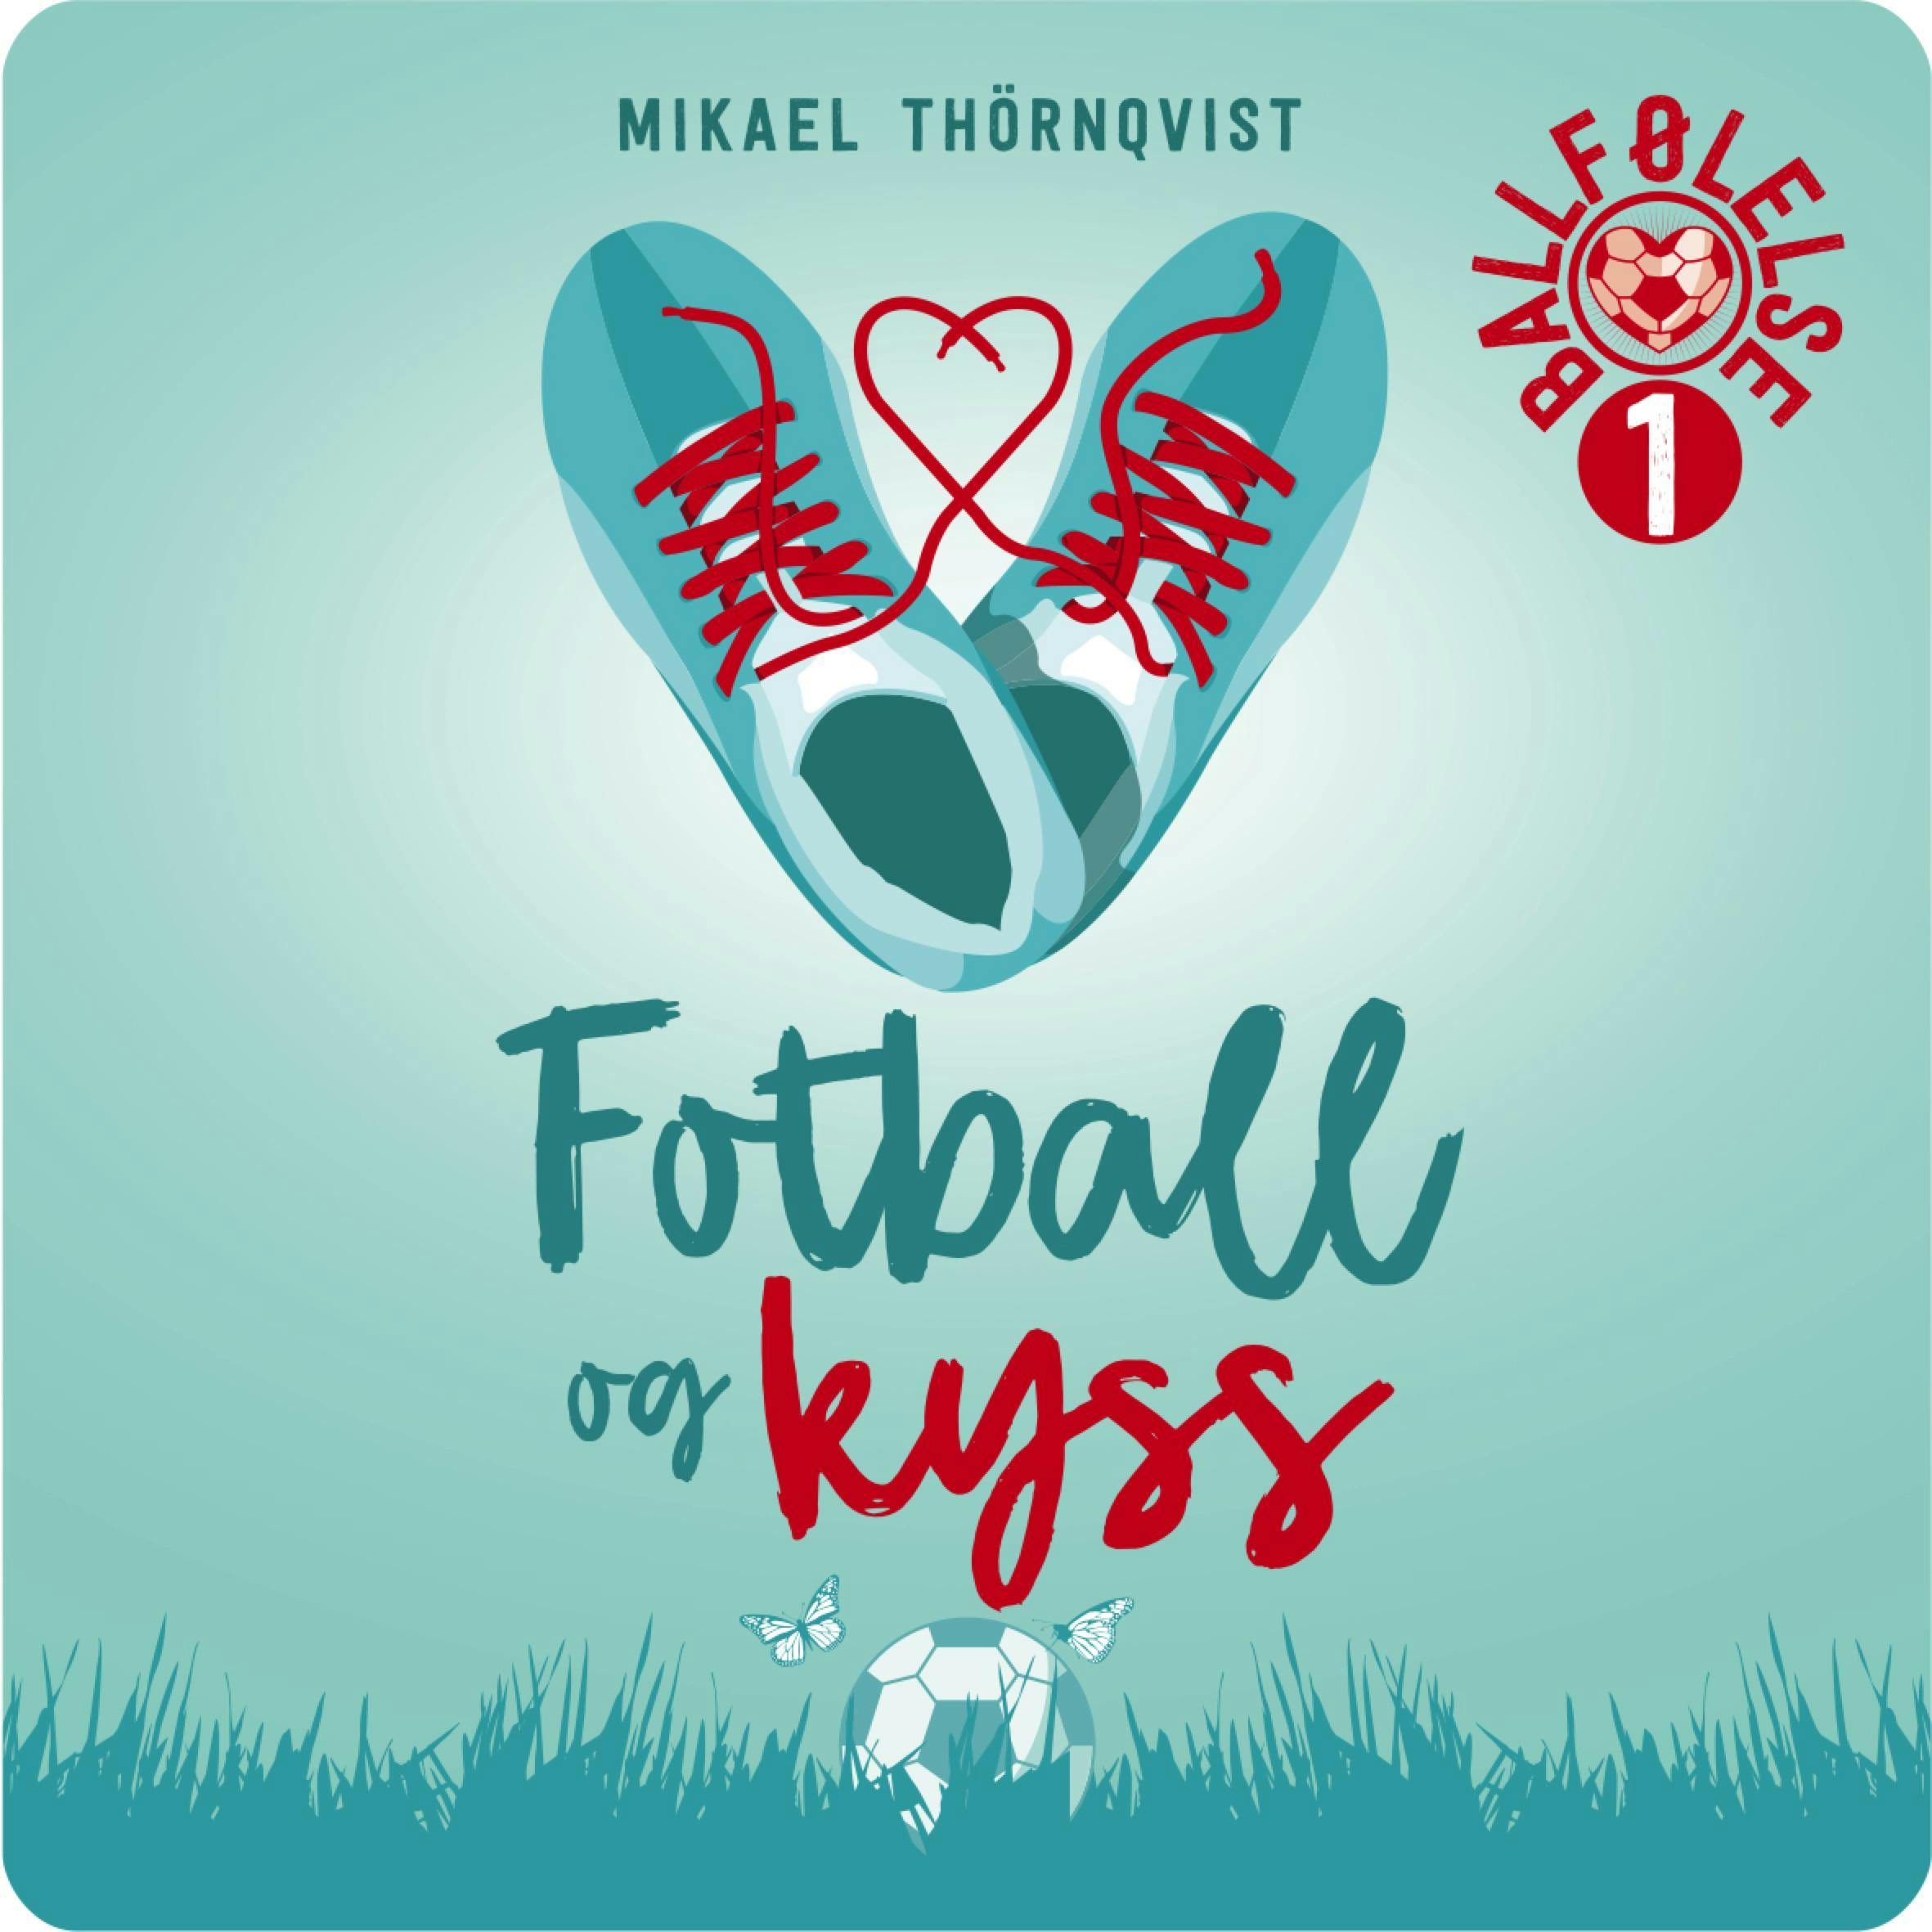 Fotball og kyss - Mikael Thörnqvist